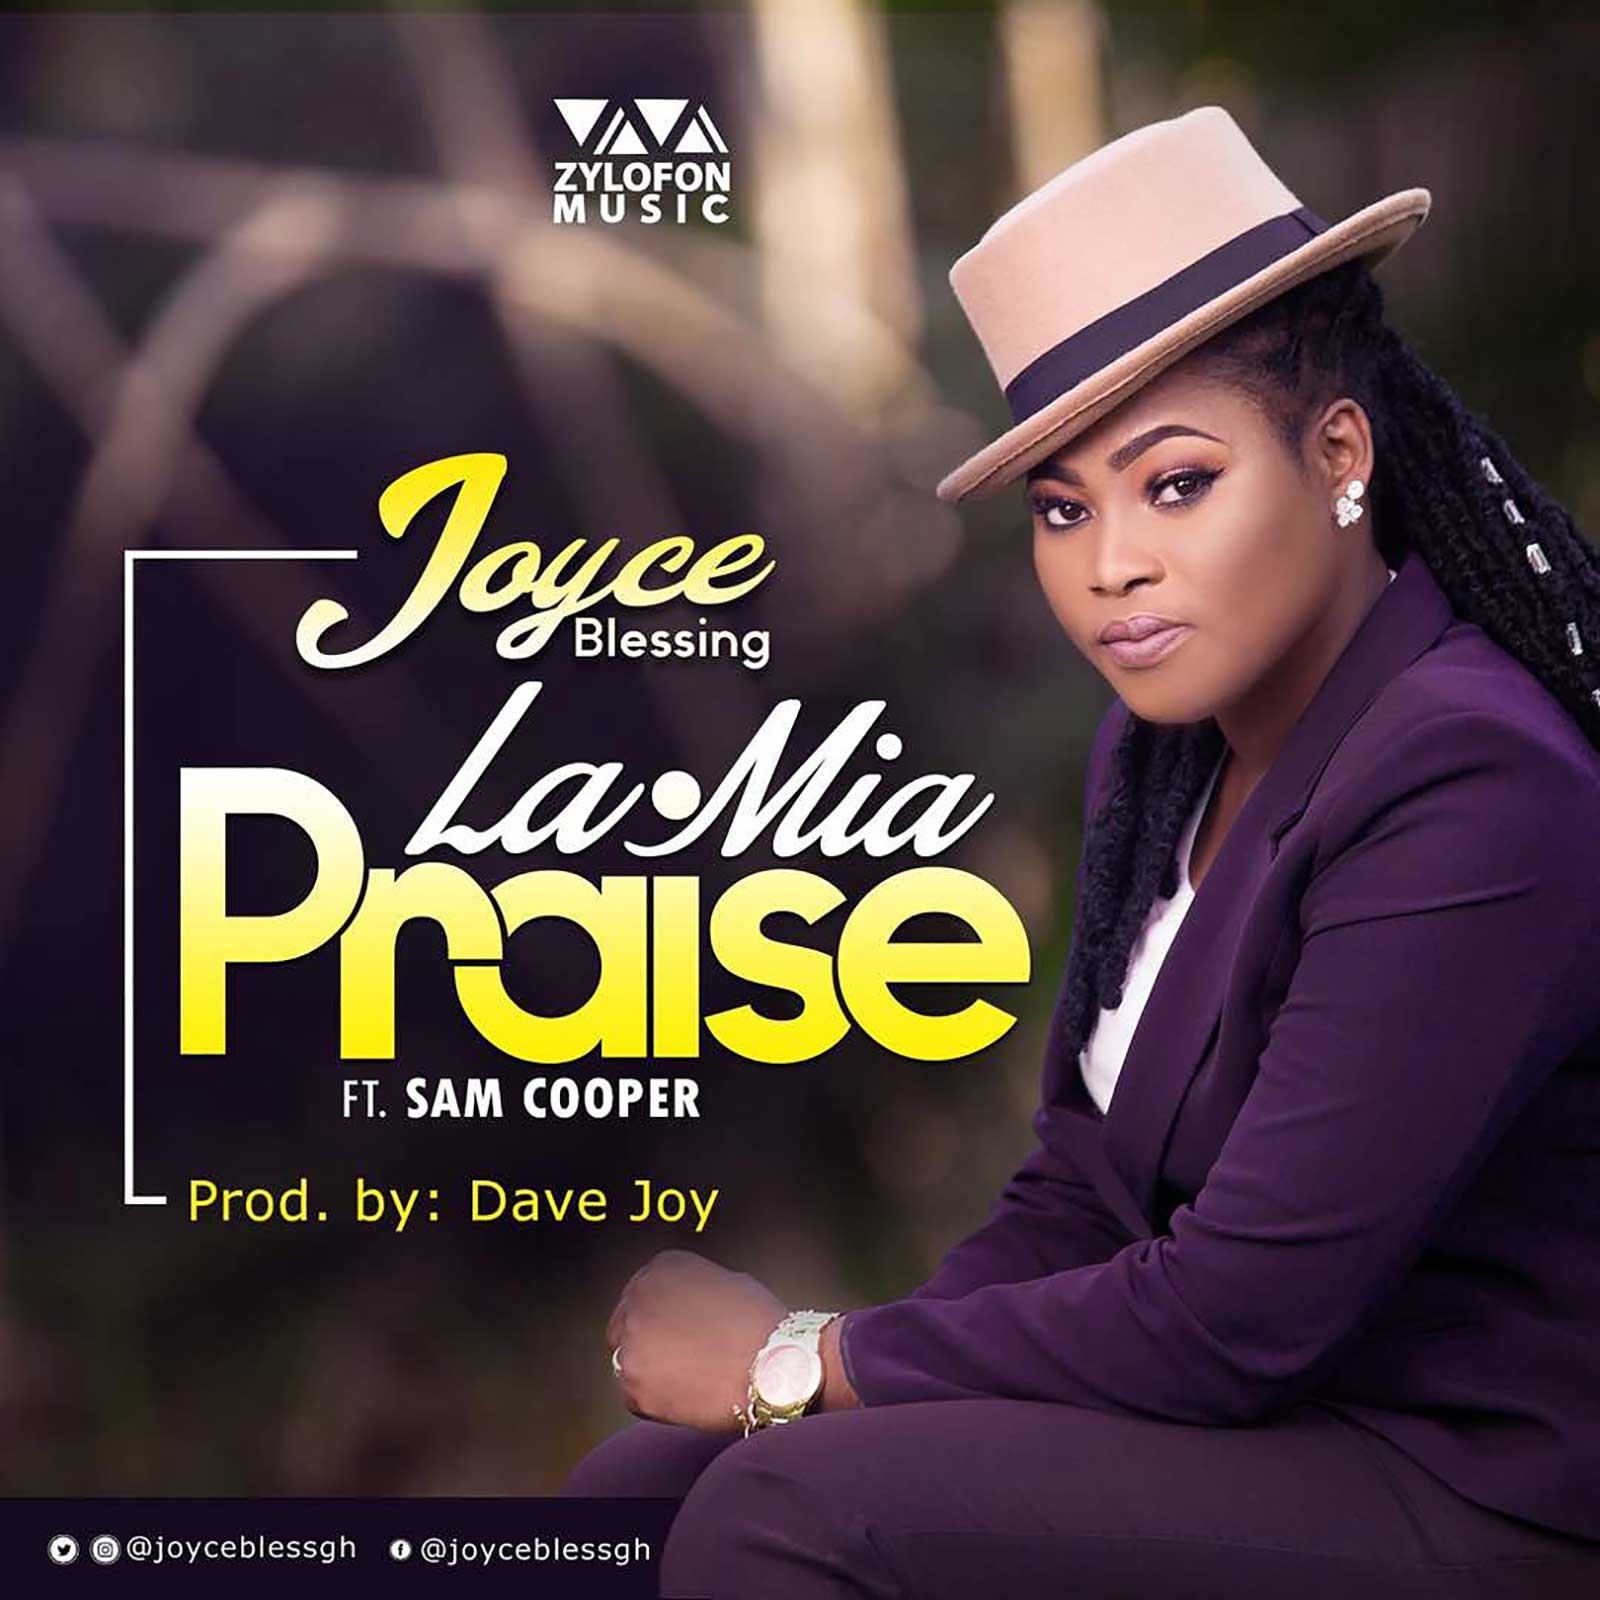 La Mia (Praise) by Joyce Blessing feat. Sam Cooper